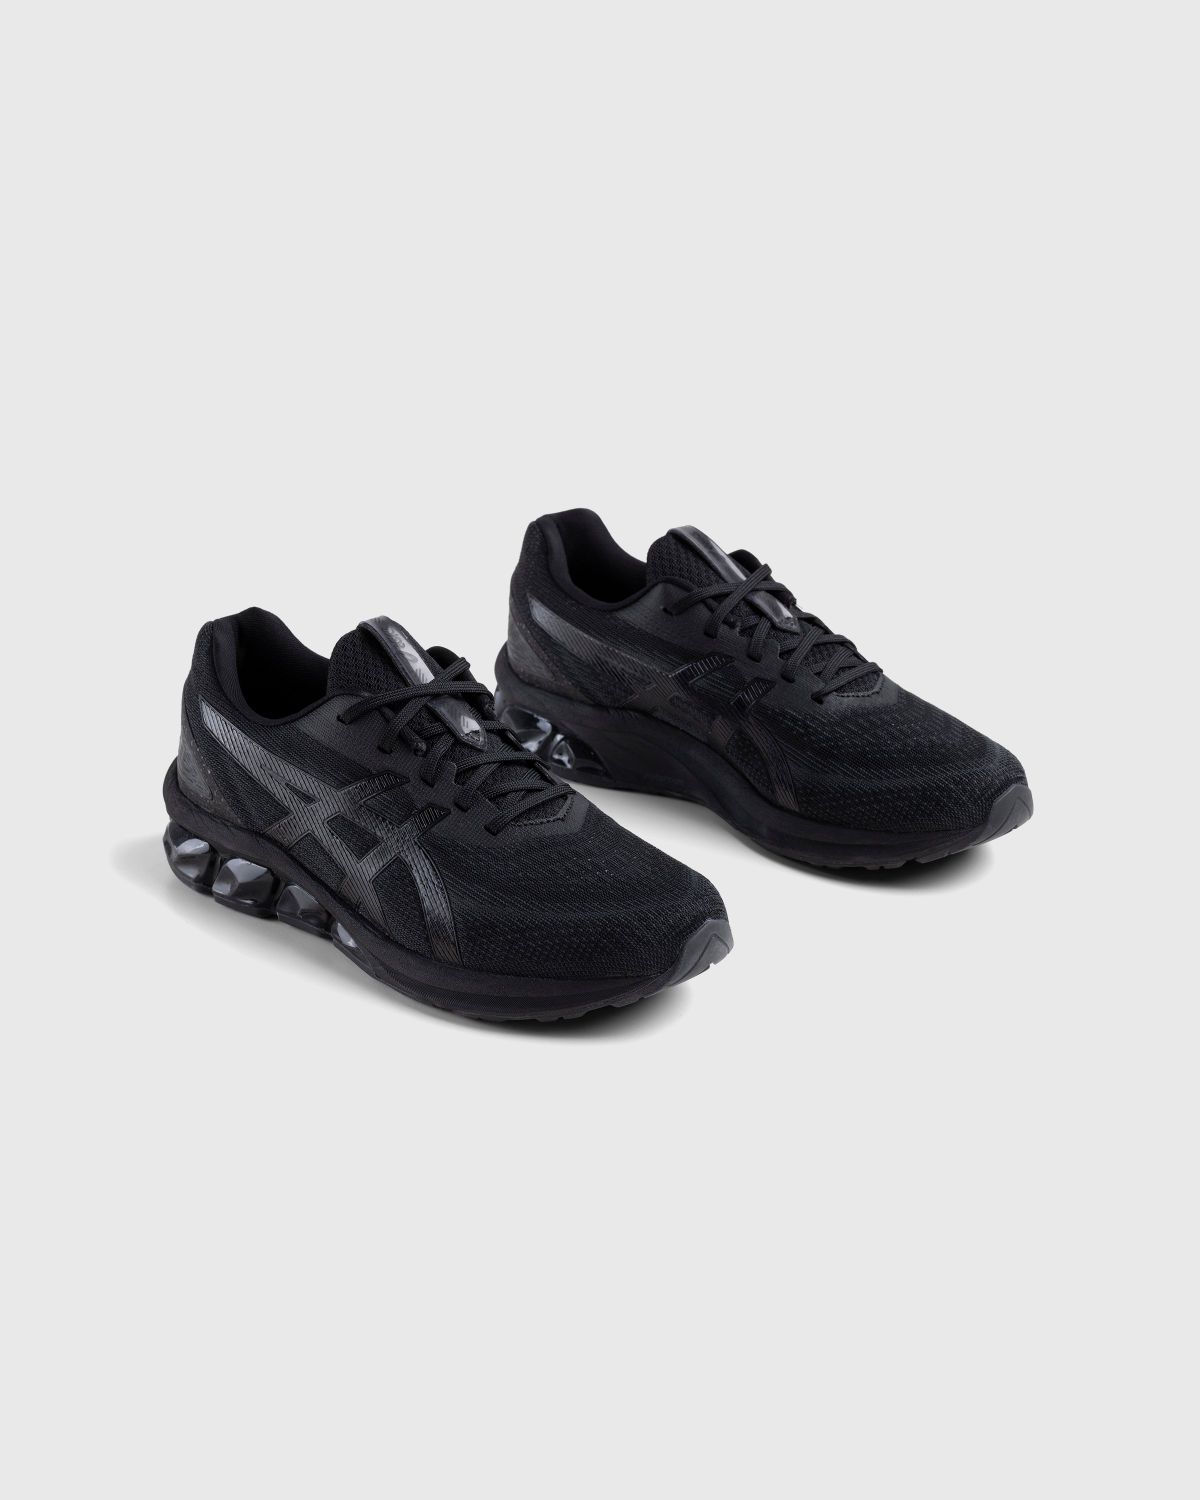 asics – Gel-Quantum 180 VII Black/Black - Low Top Sneakers - Black - Image 3